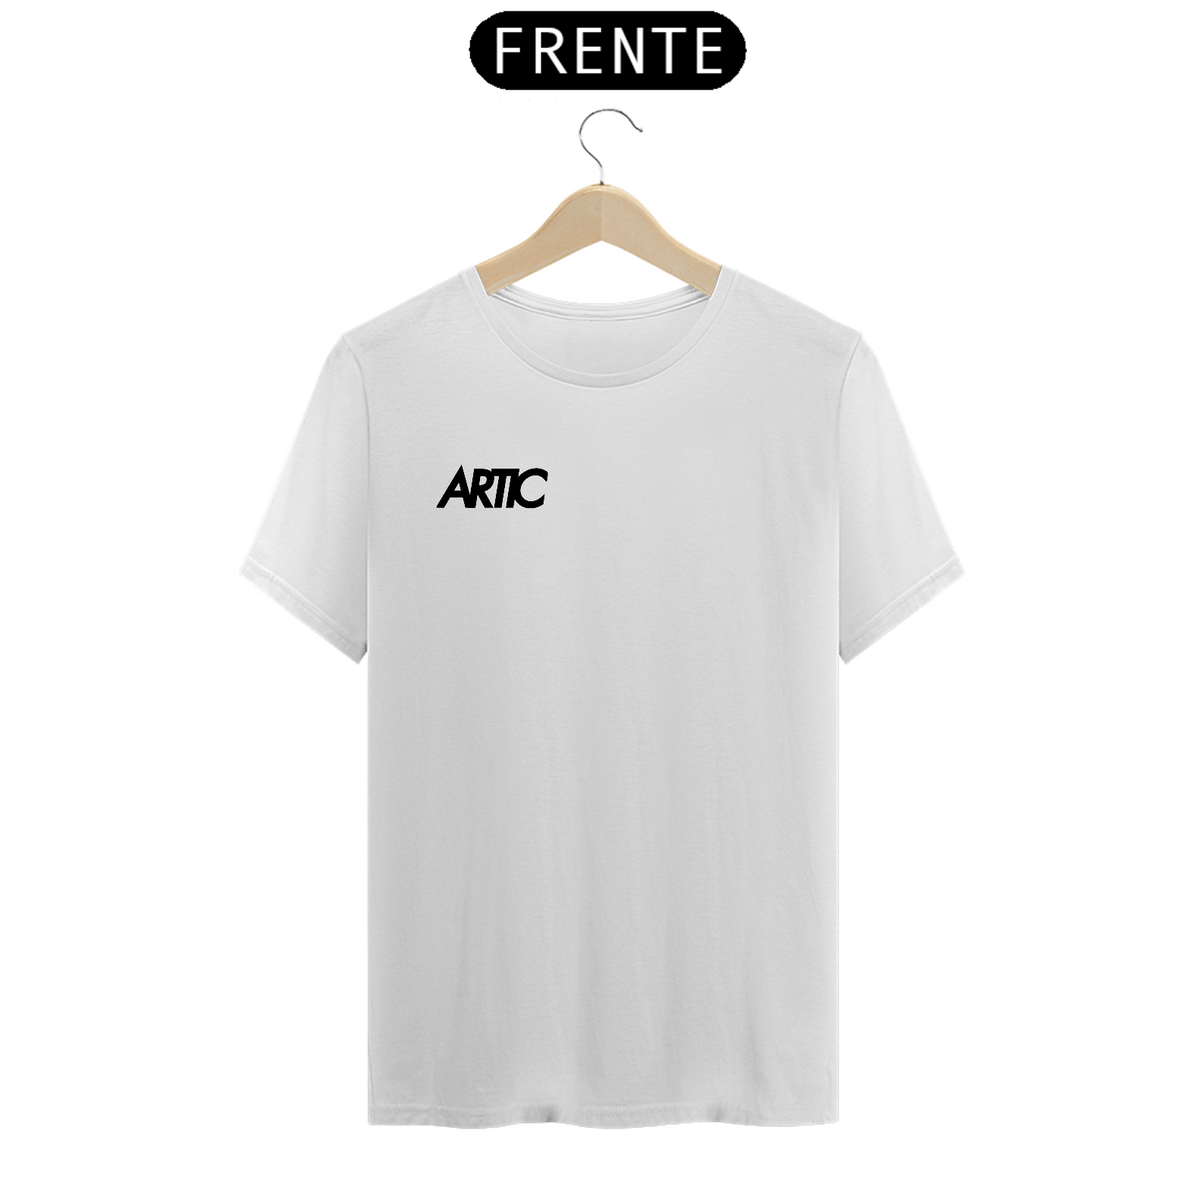 Nome do produto: Camiseta - Artic - Minimalista